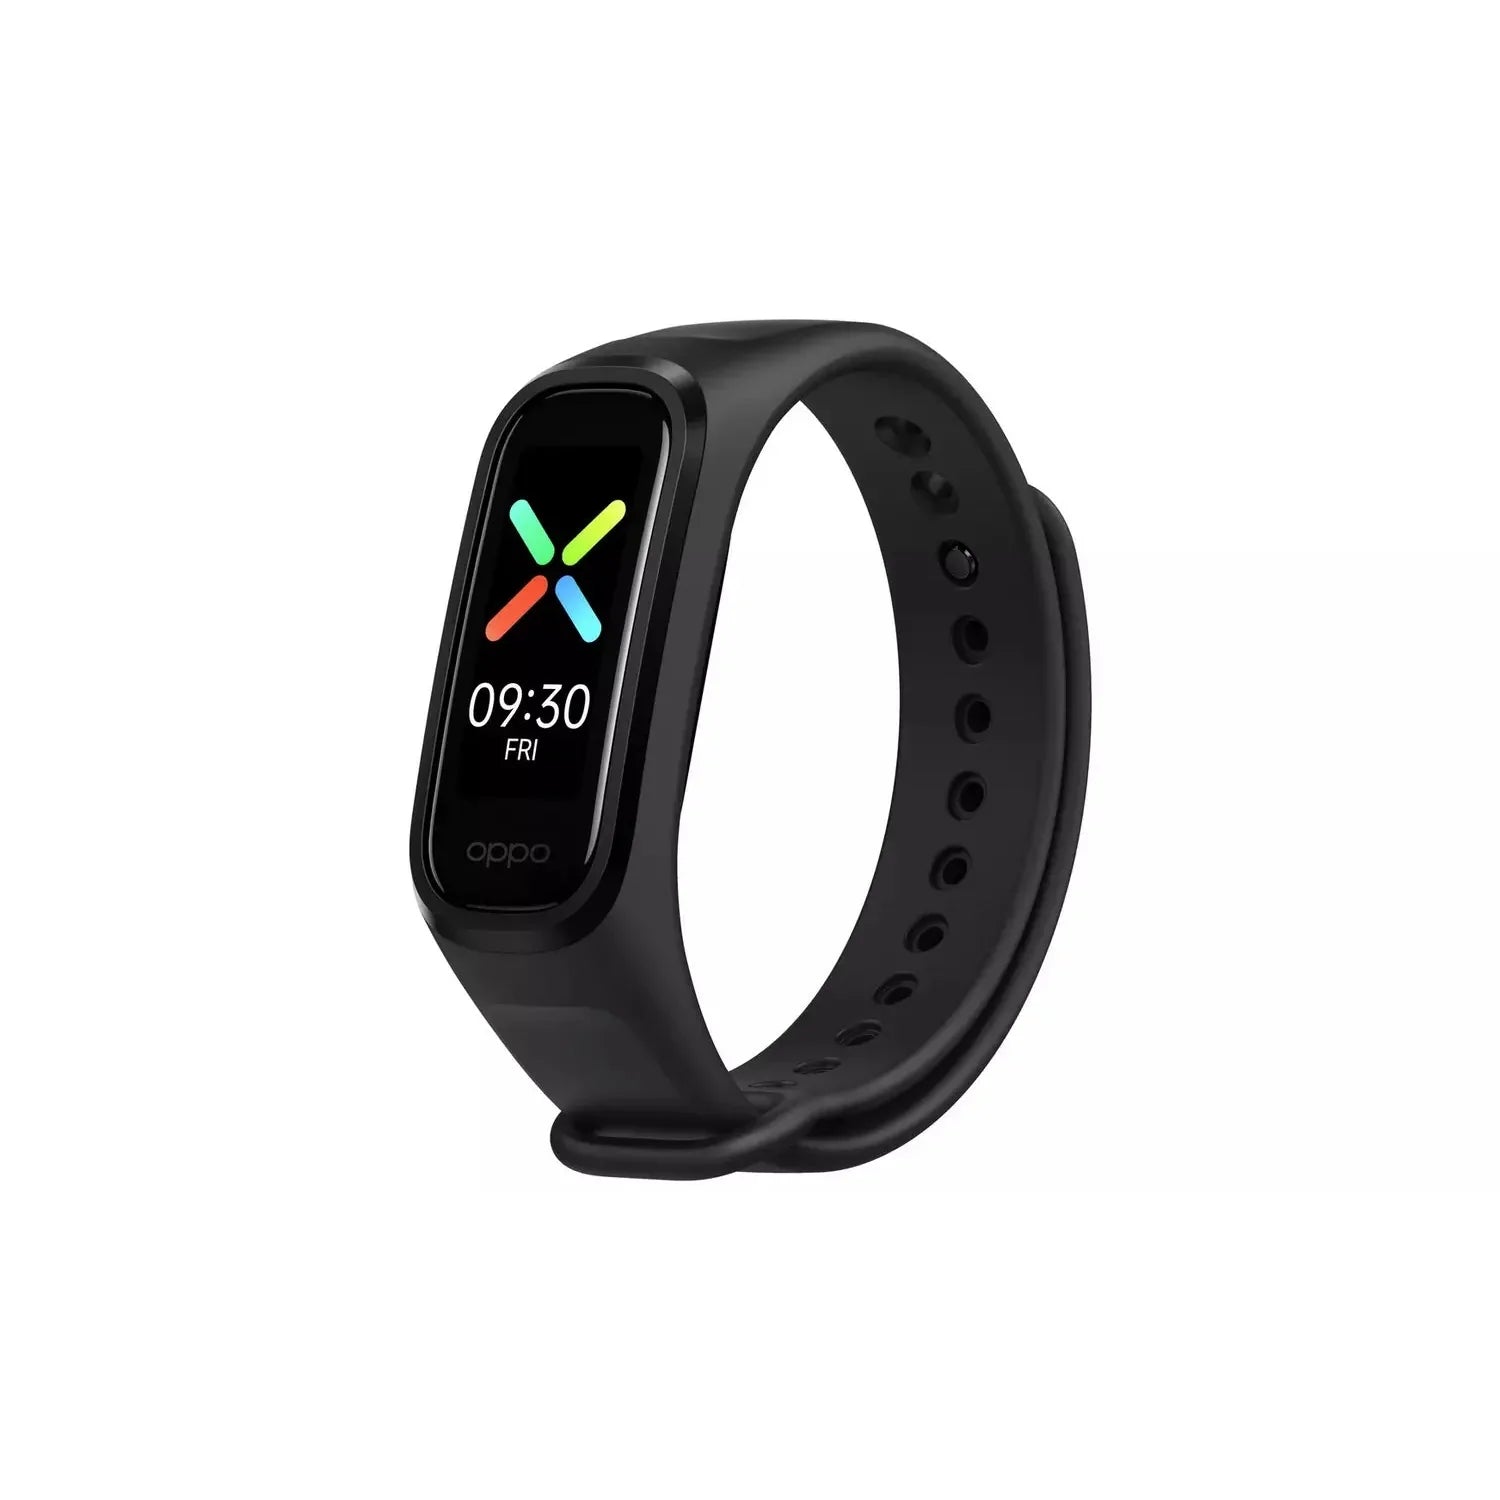 Oppo Band Smart Watch - Black - Refurbished Excellent